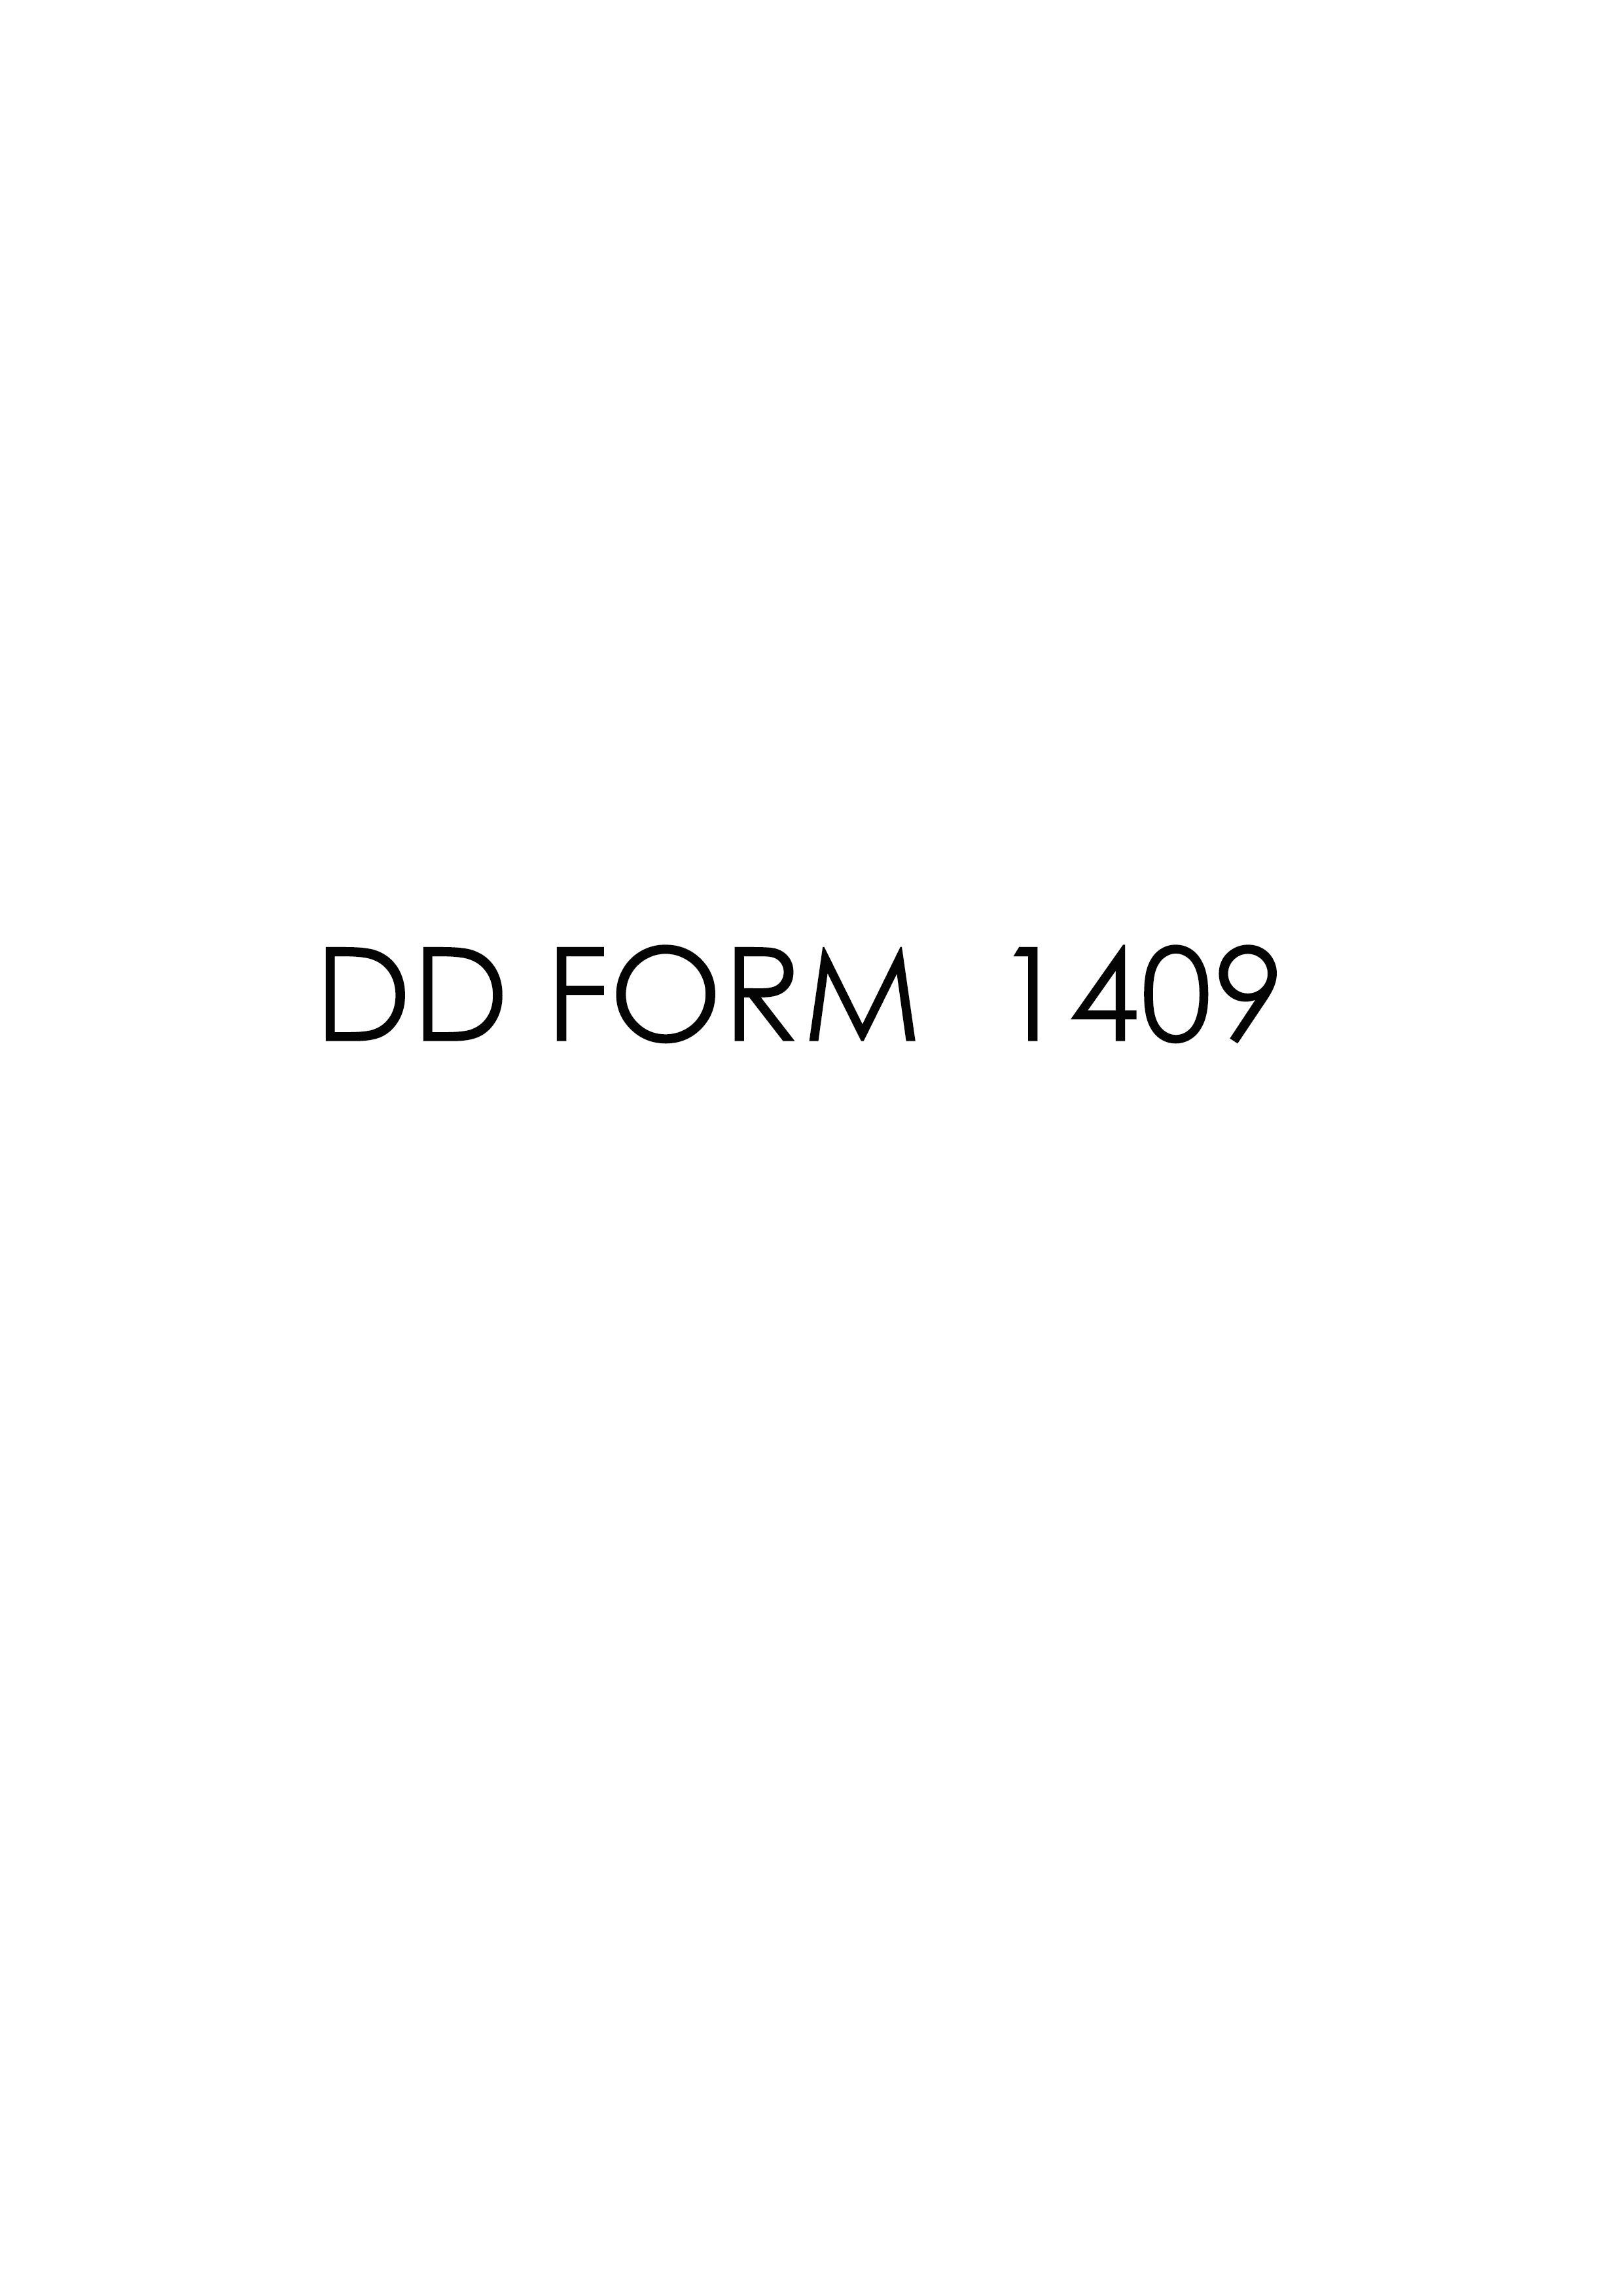 Download dd 1409 Form